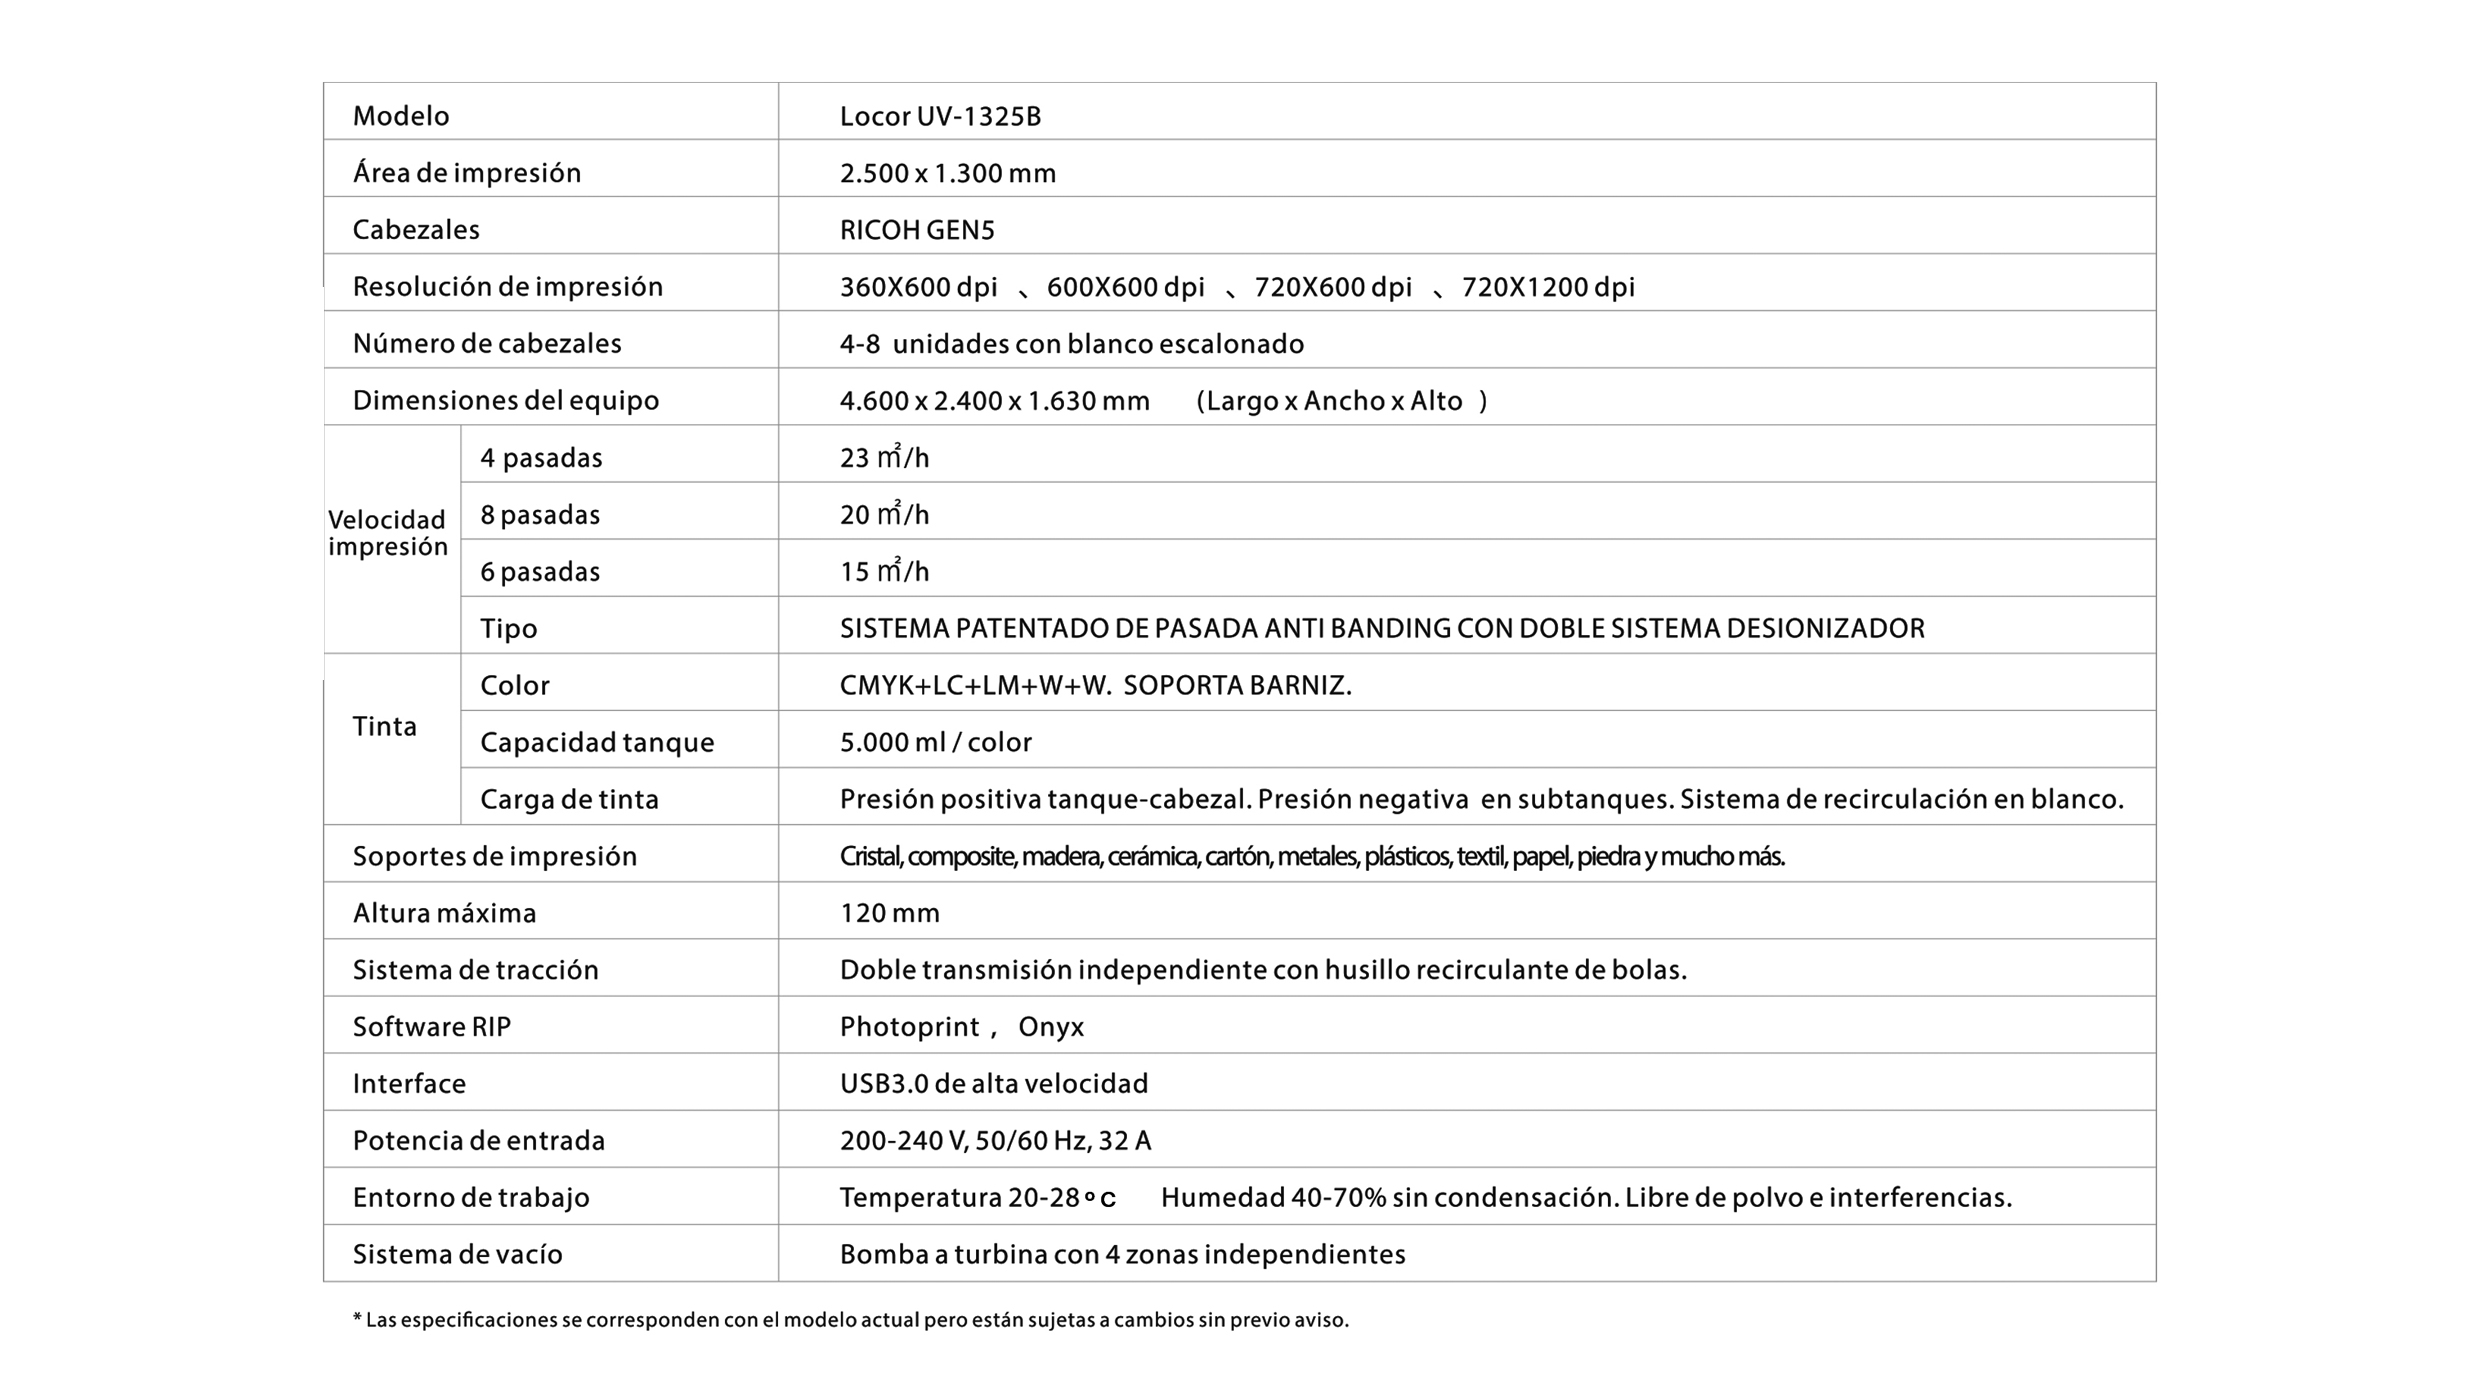 especificaciones-LOCOR-UV-2513B--01